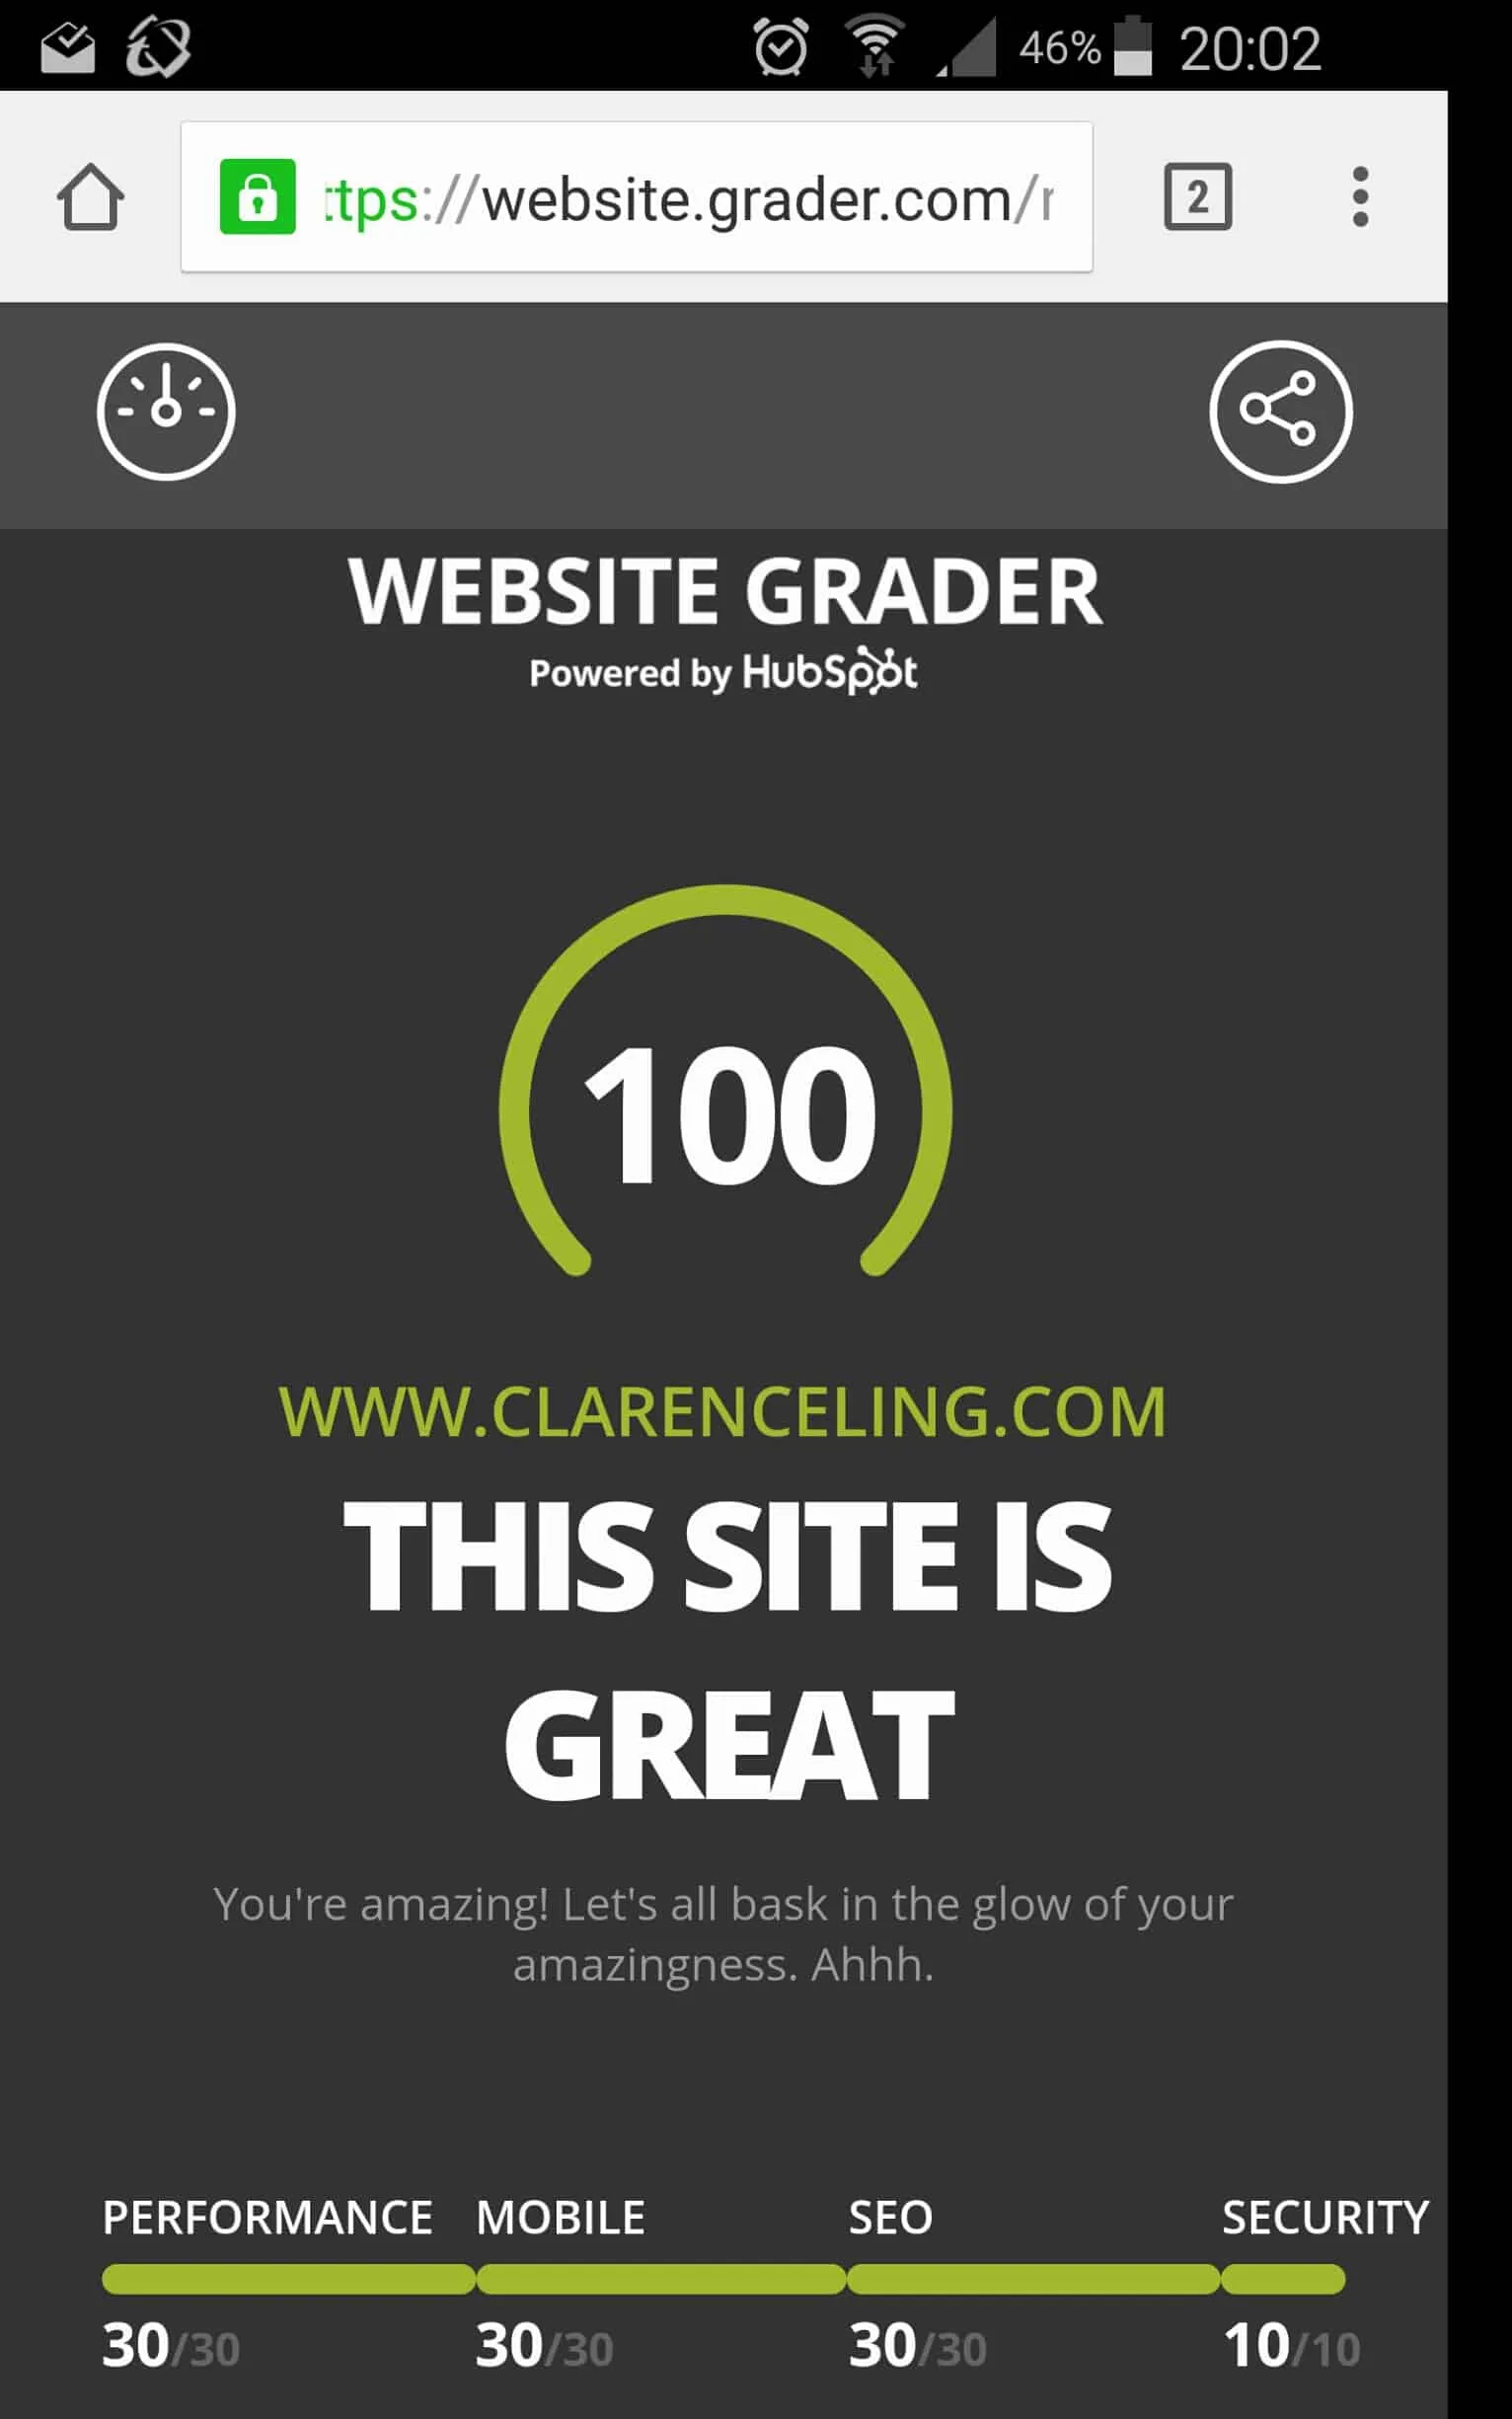 Hubspot website grader clarence ling perfect score 100/100